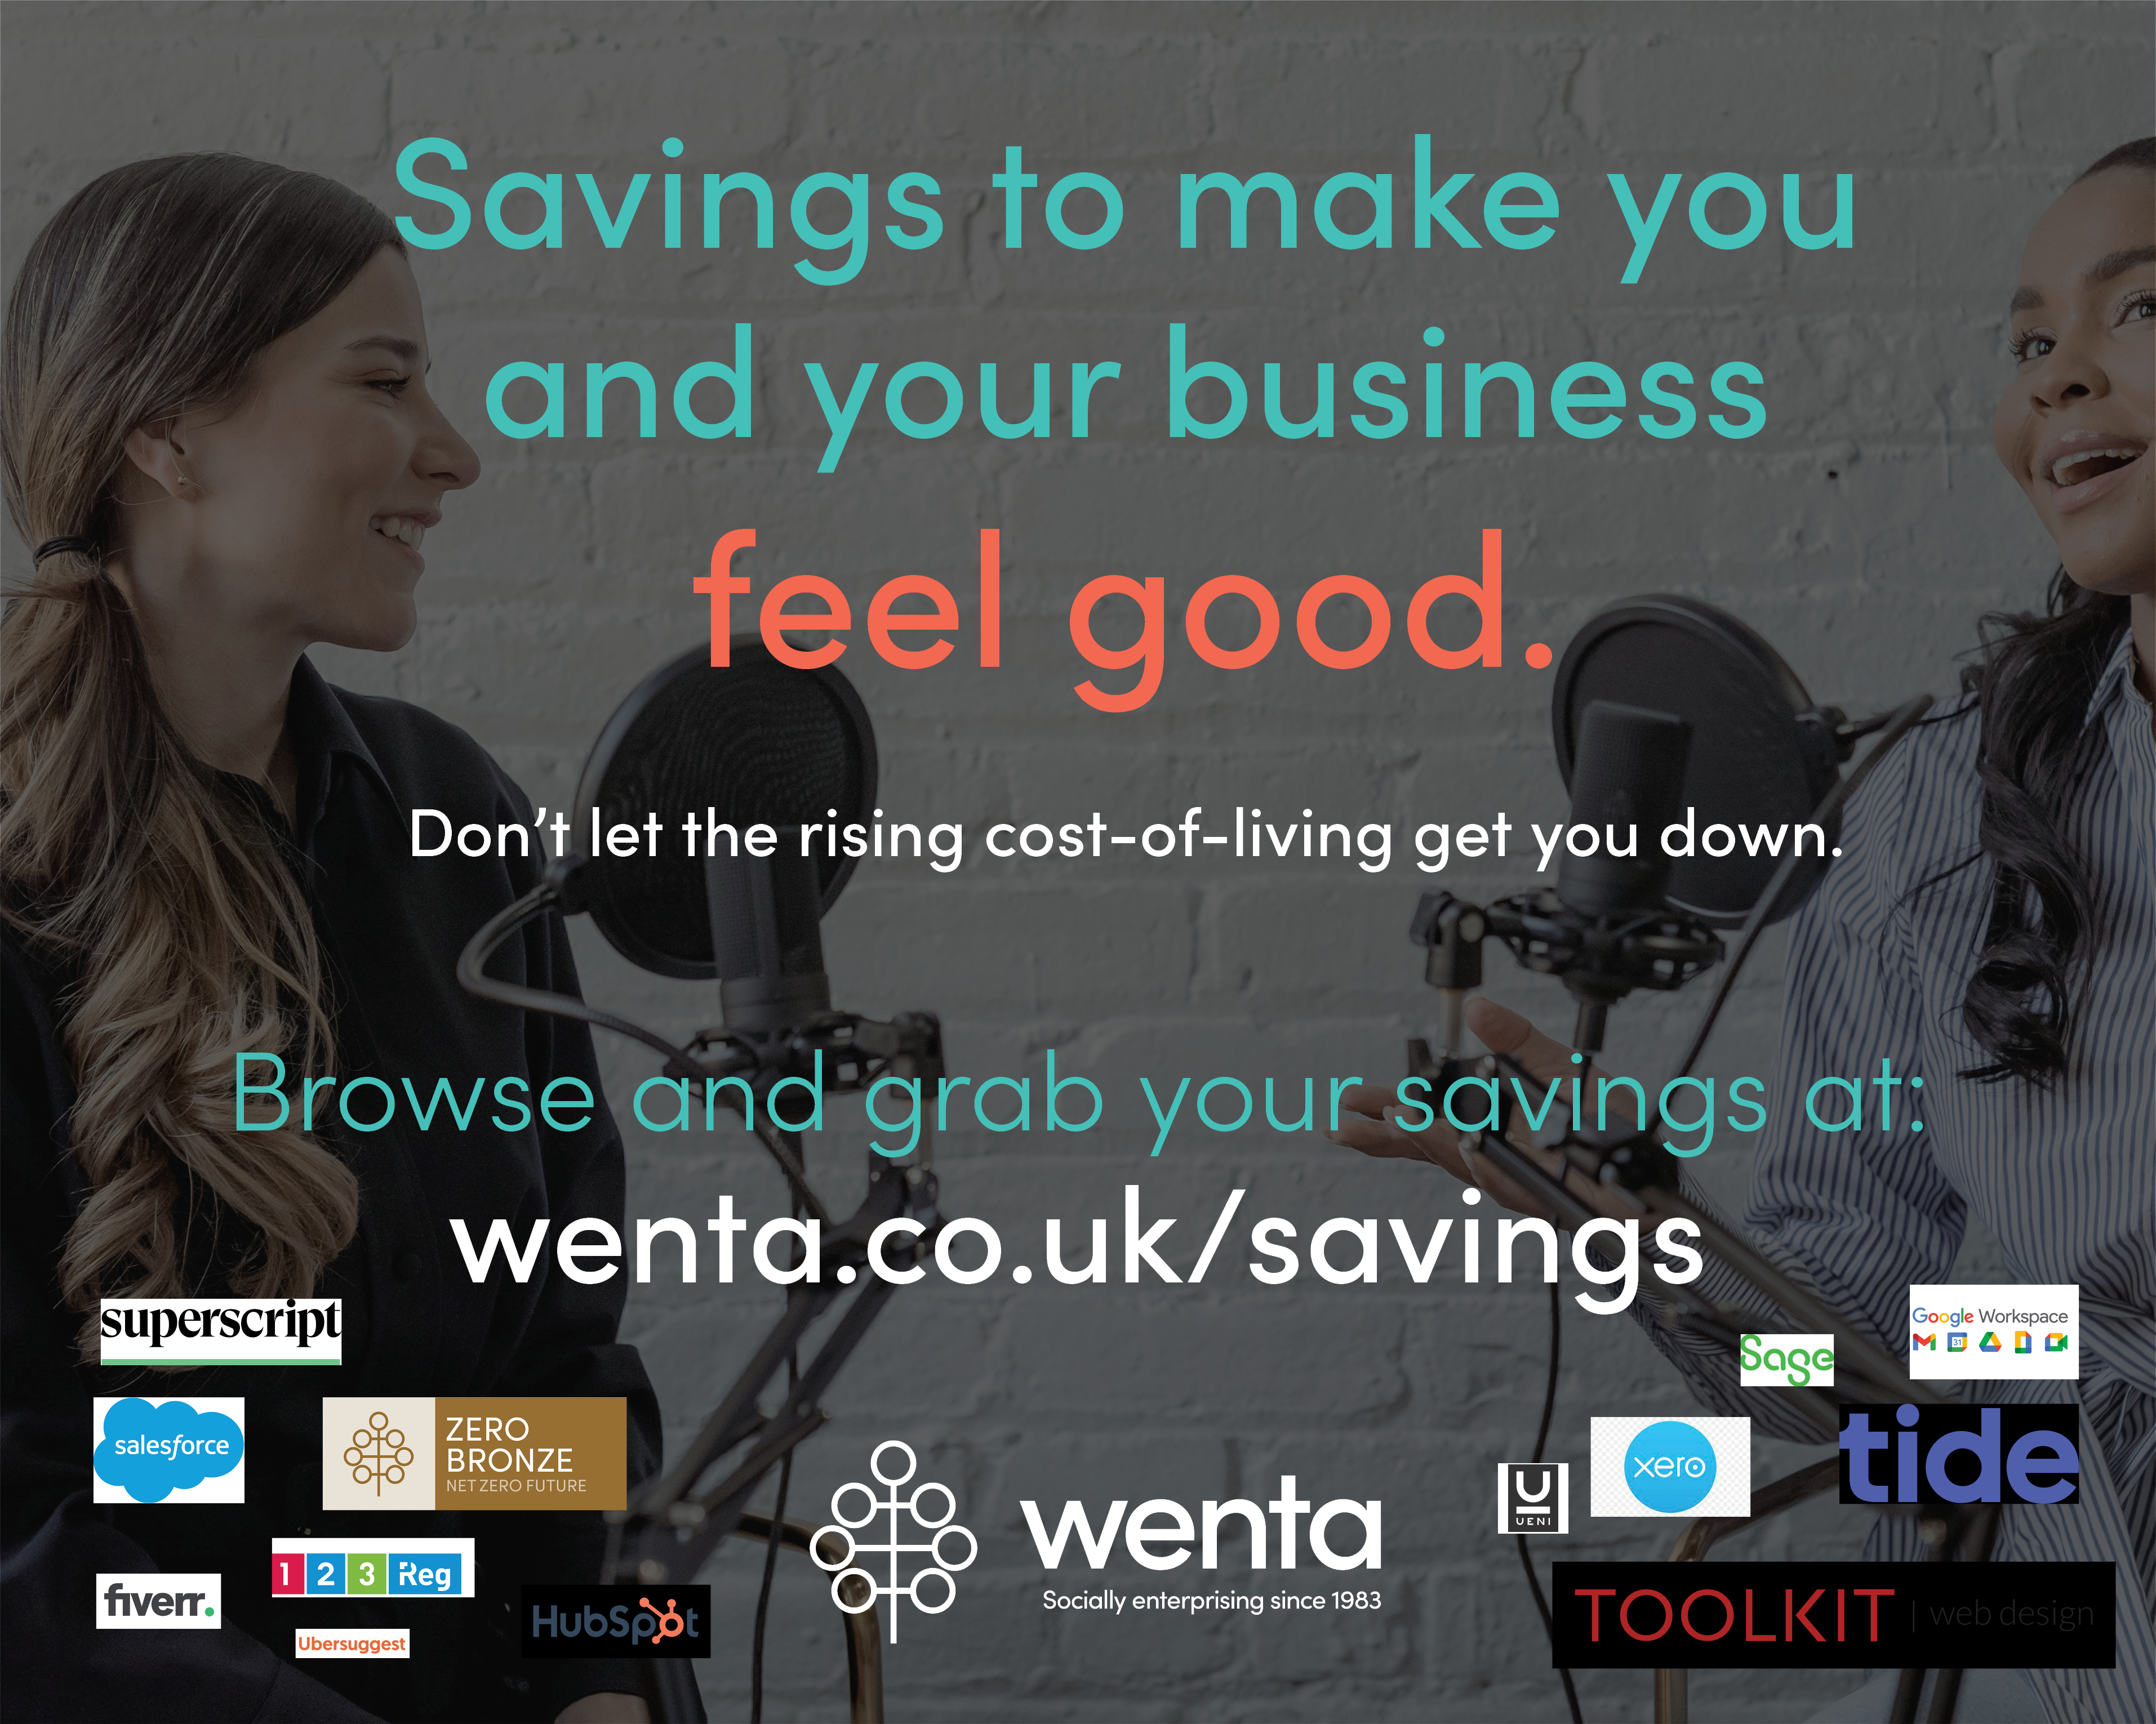 Wenta - Our Journey to Net Zero.